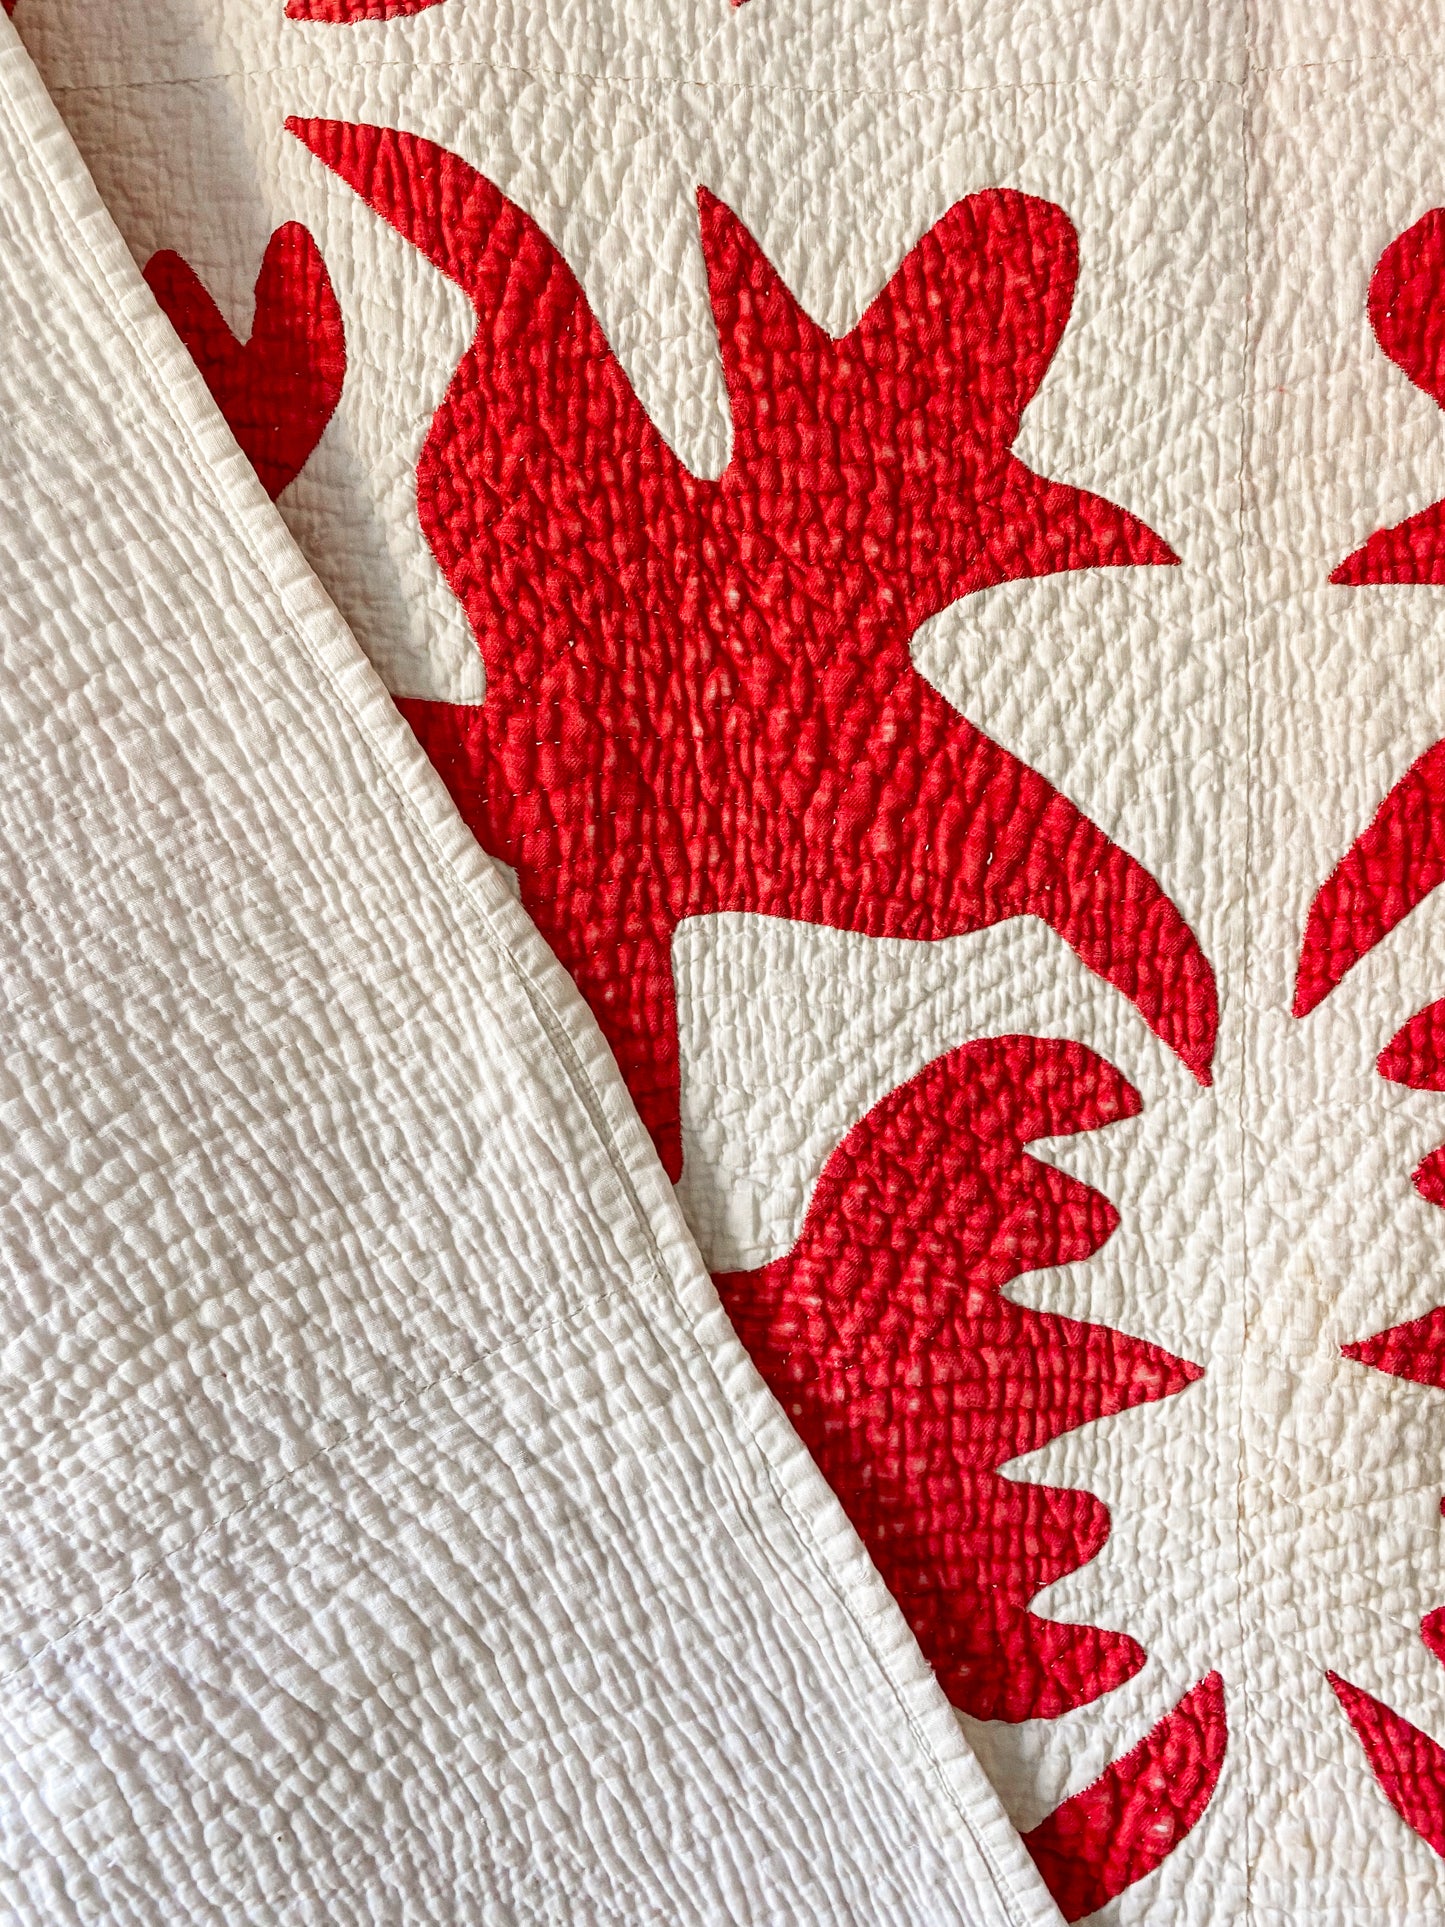 Antique Turkey Red Papercut Applique Quilt, c1850